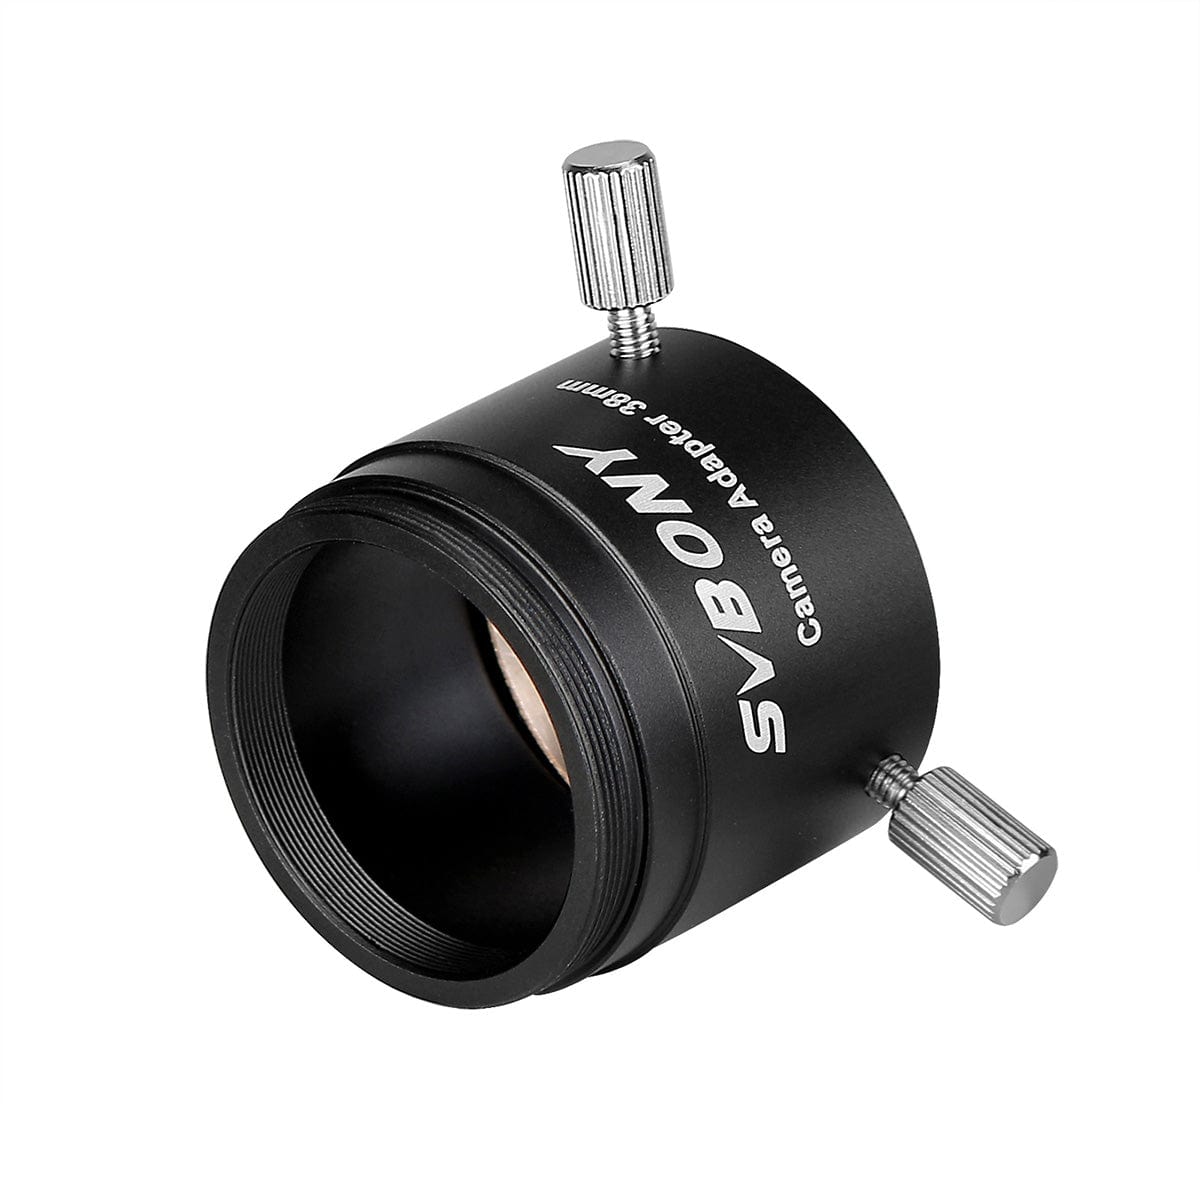 Svbony Accessory 38mm Svbony SV186 T2 M42 Camera Adapter for Connecting Scope Eyepiece